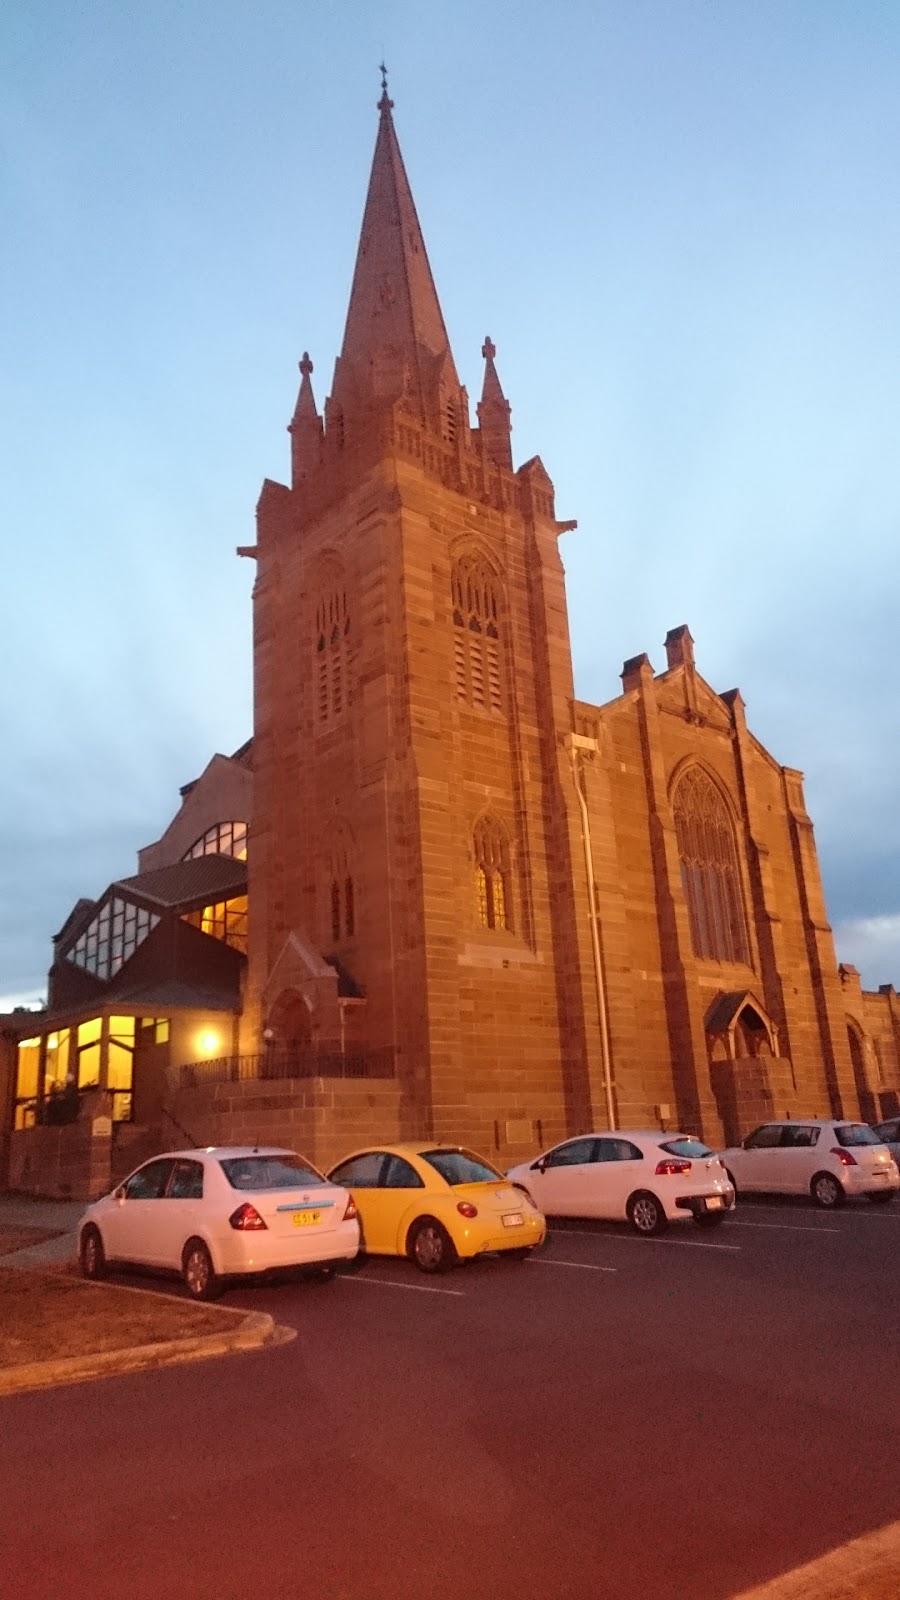 Presbyterian Church of Saint Andrew | church | 1 State Cir, Forrest ACT 2603, Australia | 0262953457 OR +61 2 6295 3457